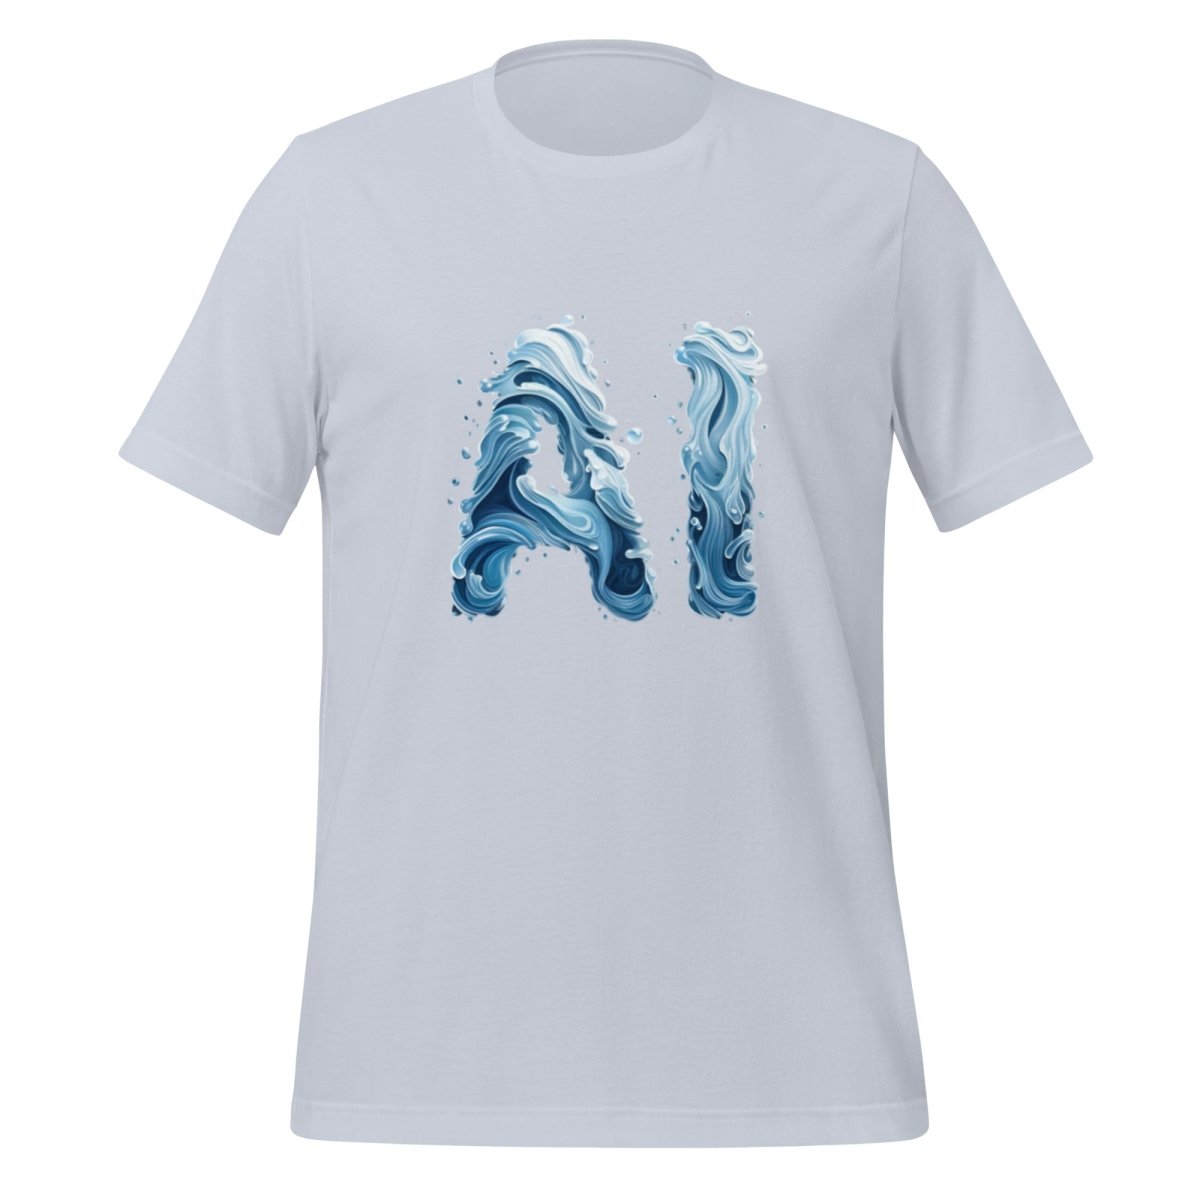 Water AI T - Shirt (unisex) - Light Blue - AI Store